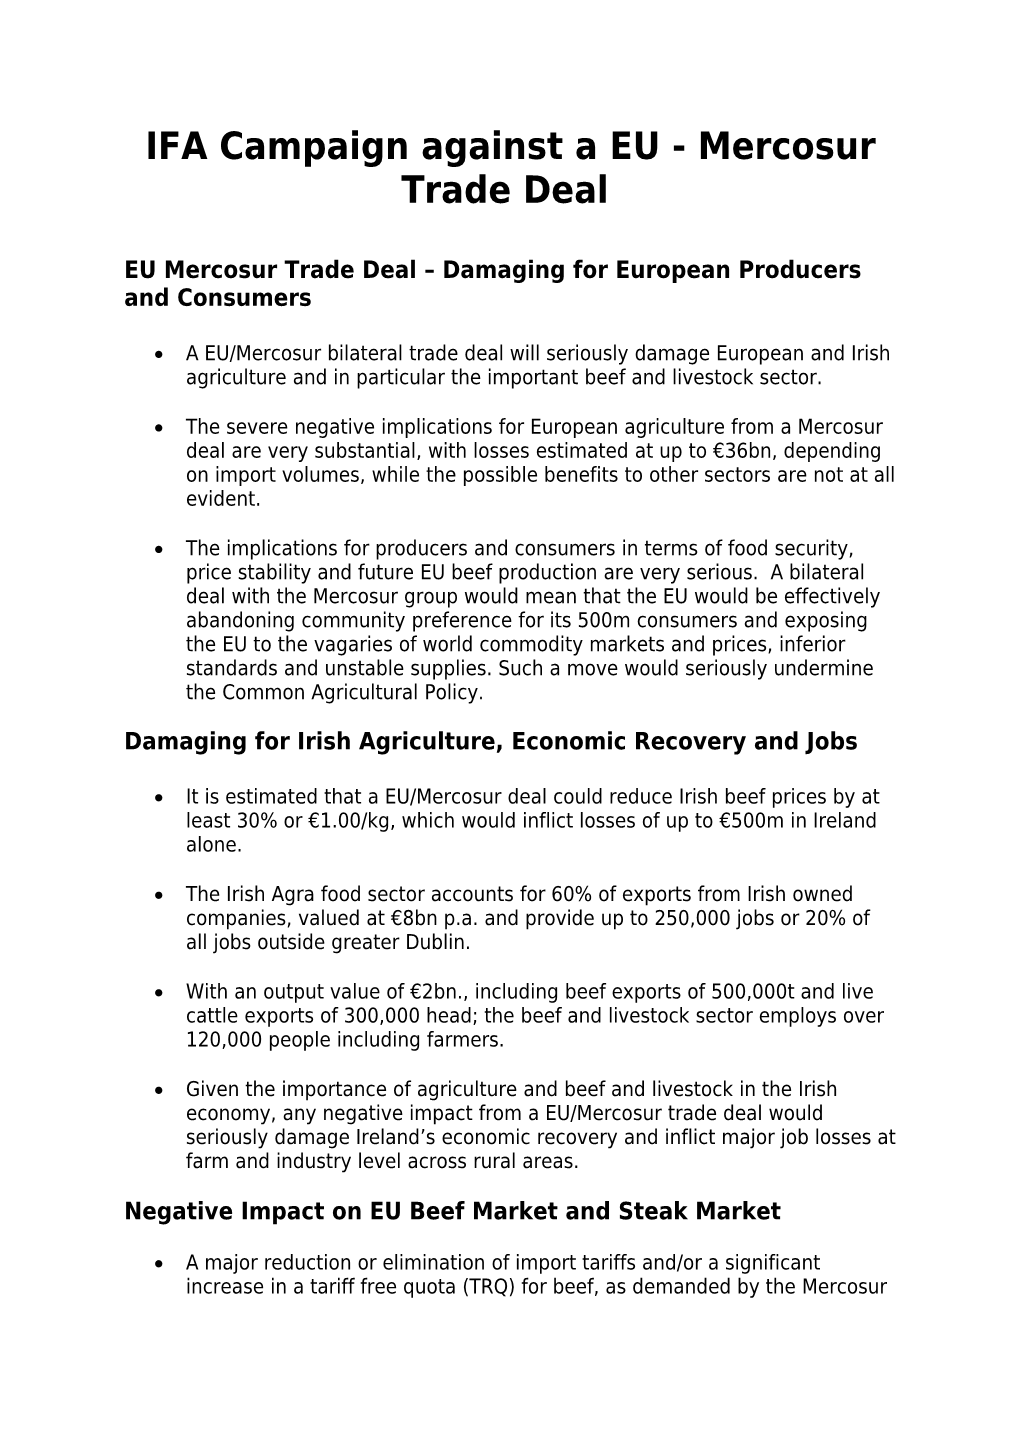 IFA Campaign Against a EU - Mercosur Trade Deal